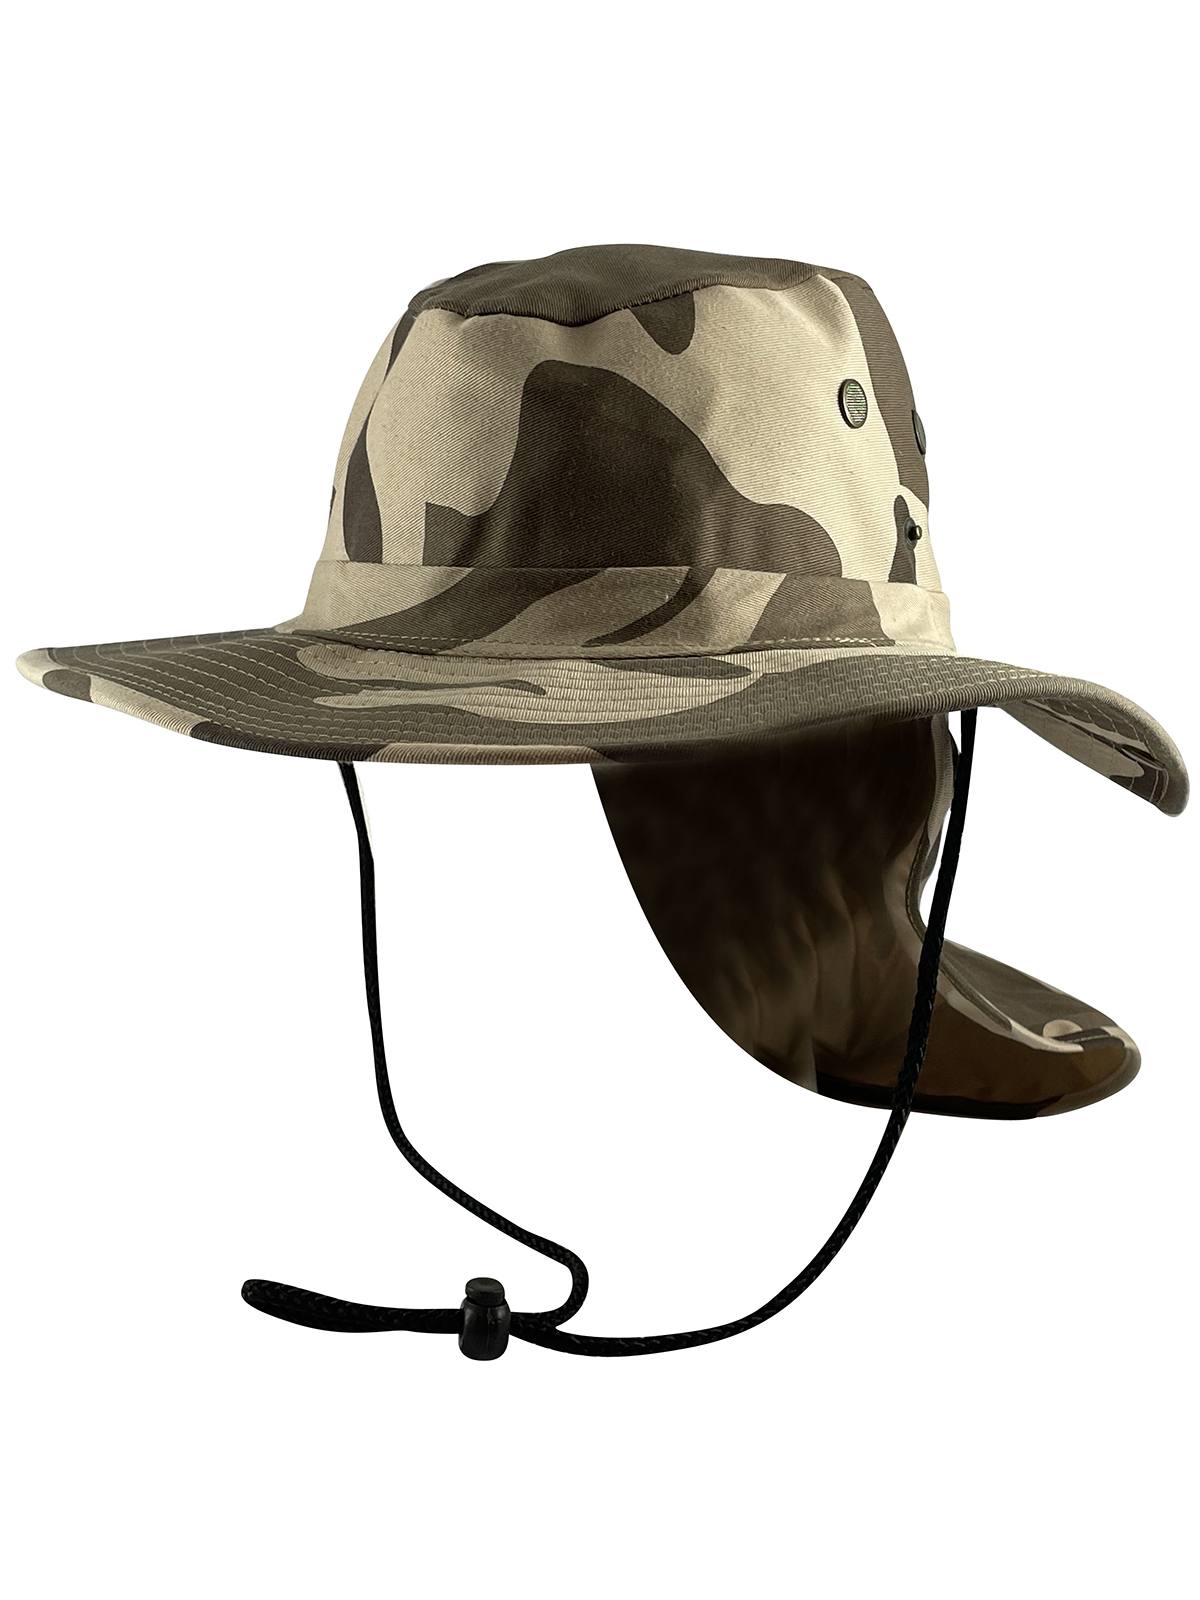 Top Headwear Safari Explorer Bucket Hat Flap Neck Cover - Desert Camo - XL - image 1 of 3